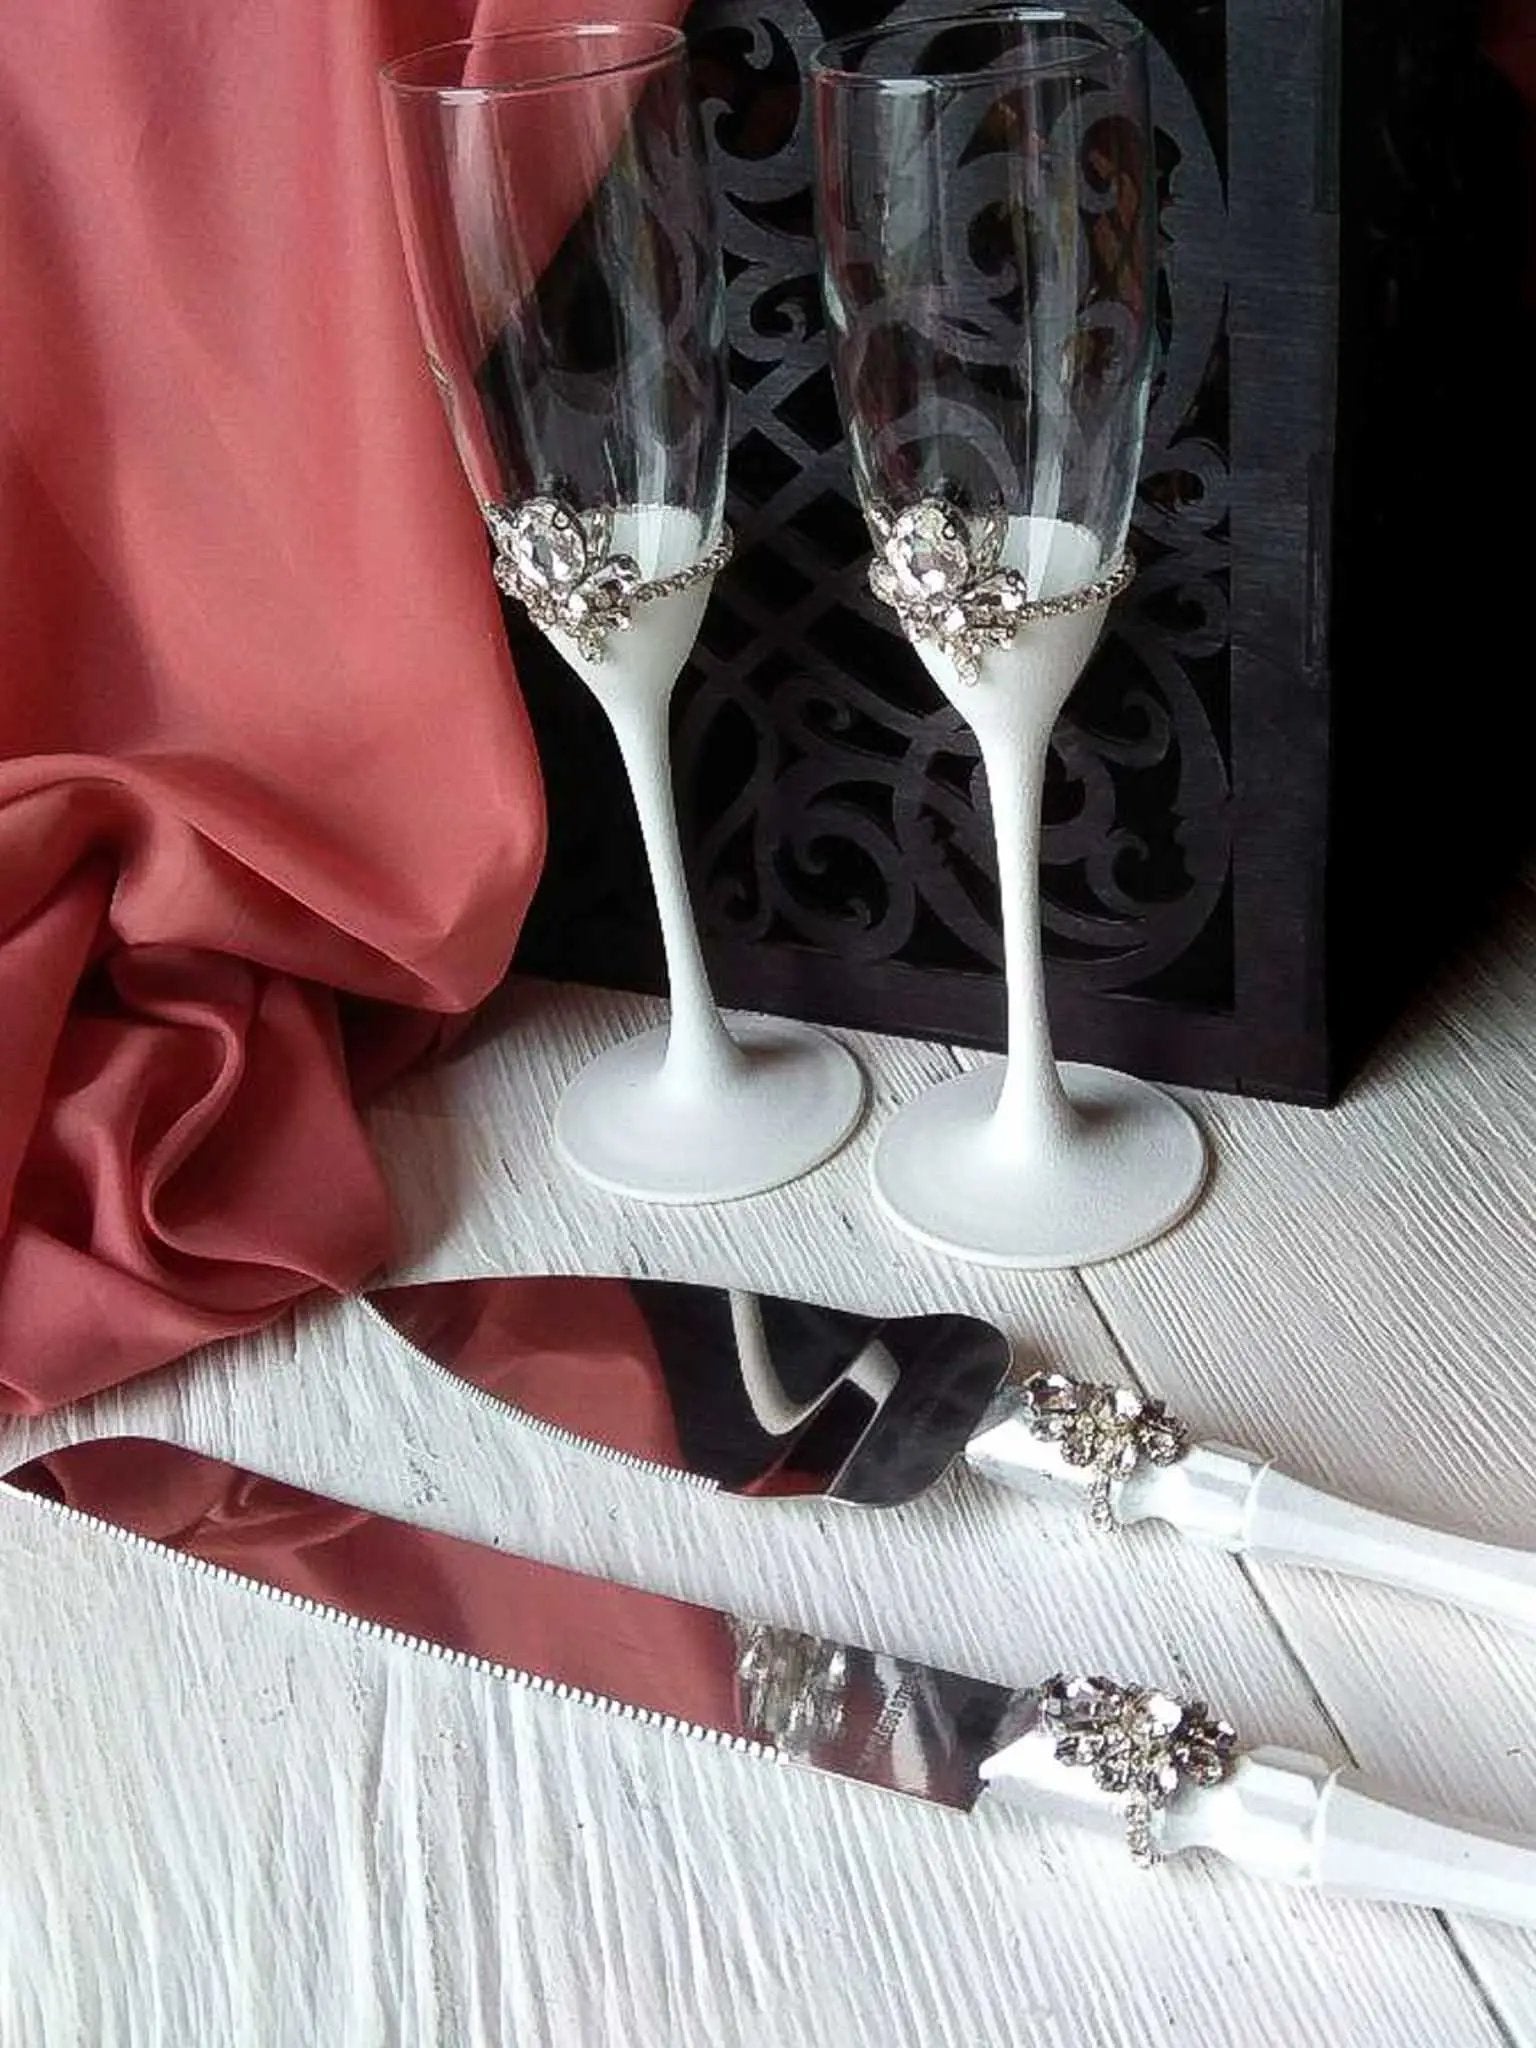 Handcrafted wedding flutes and cake serving utensils